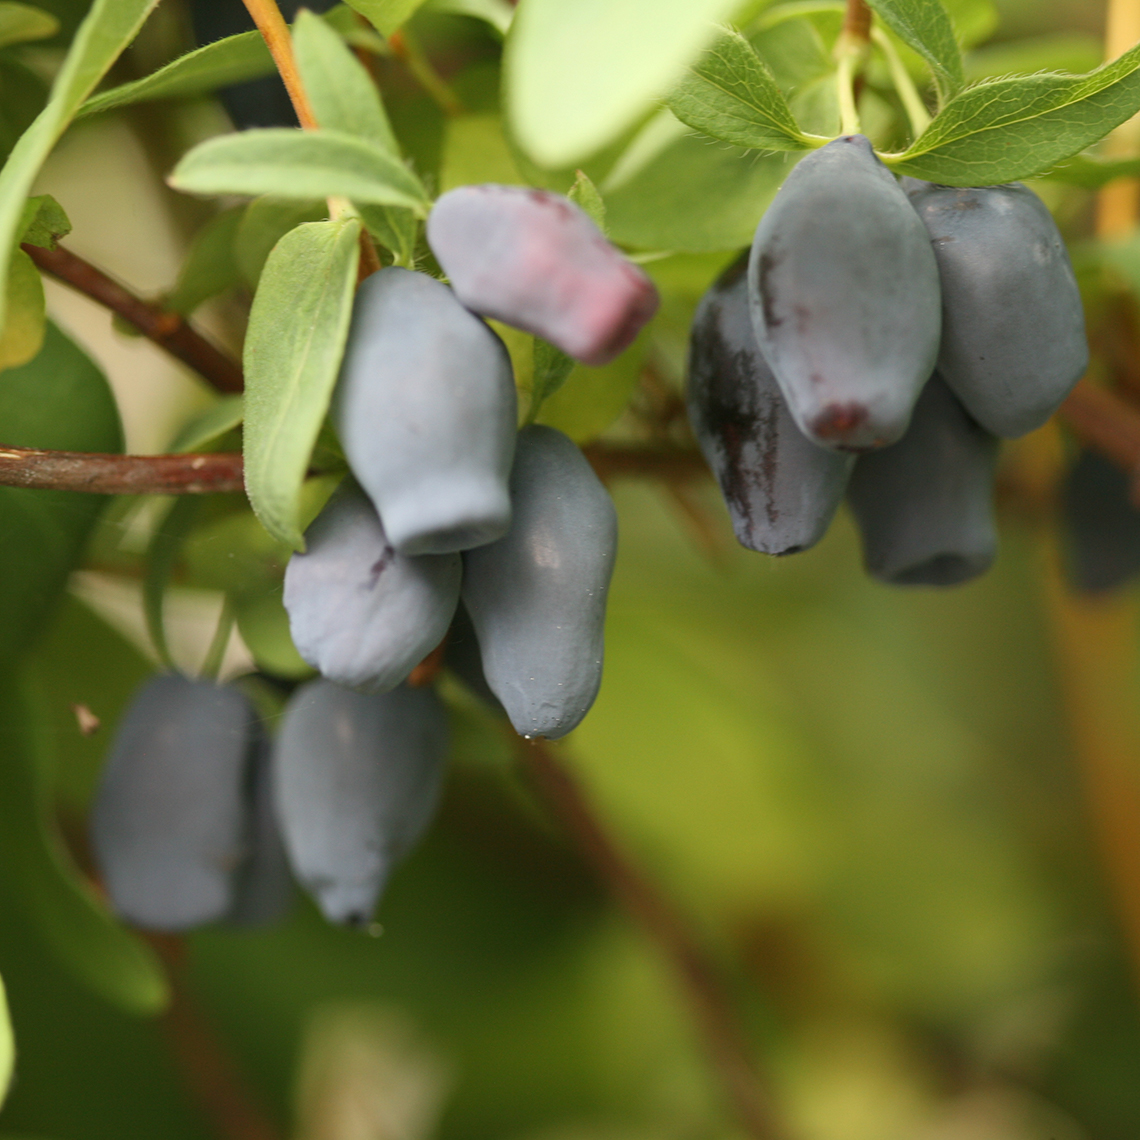 Close up of Yezberry Maxie Lonicera berries on vine